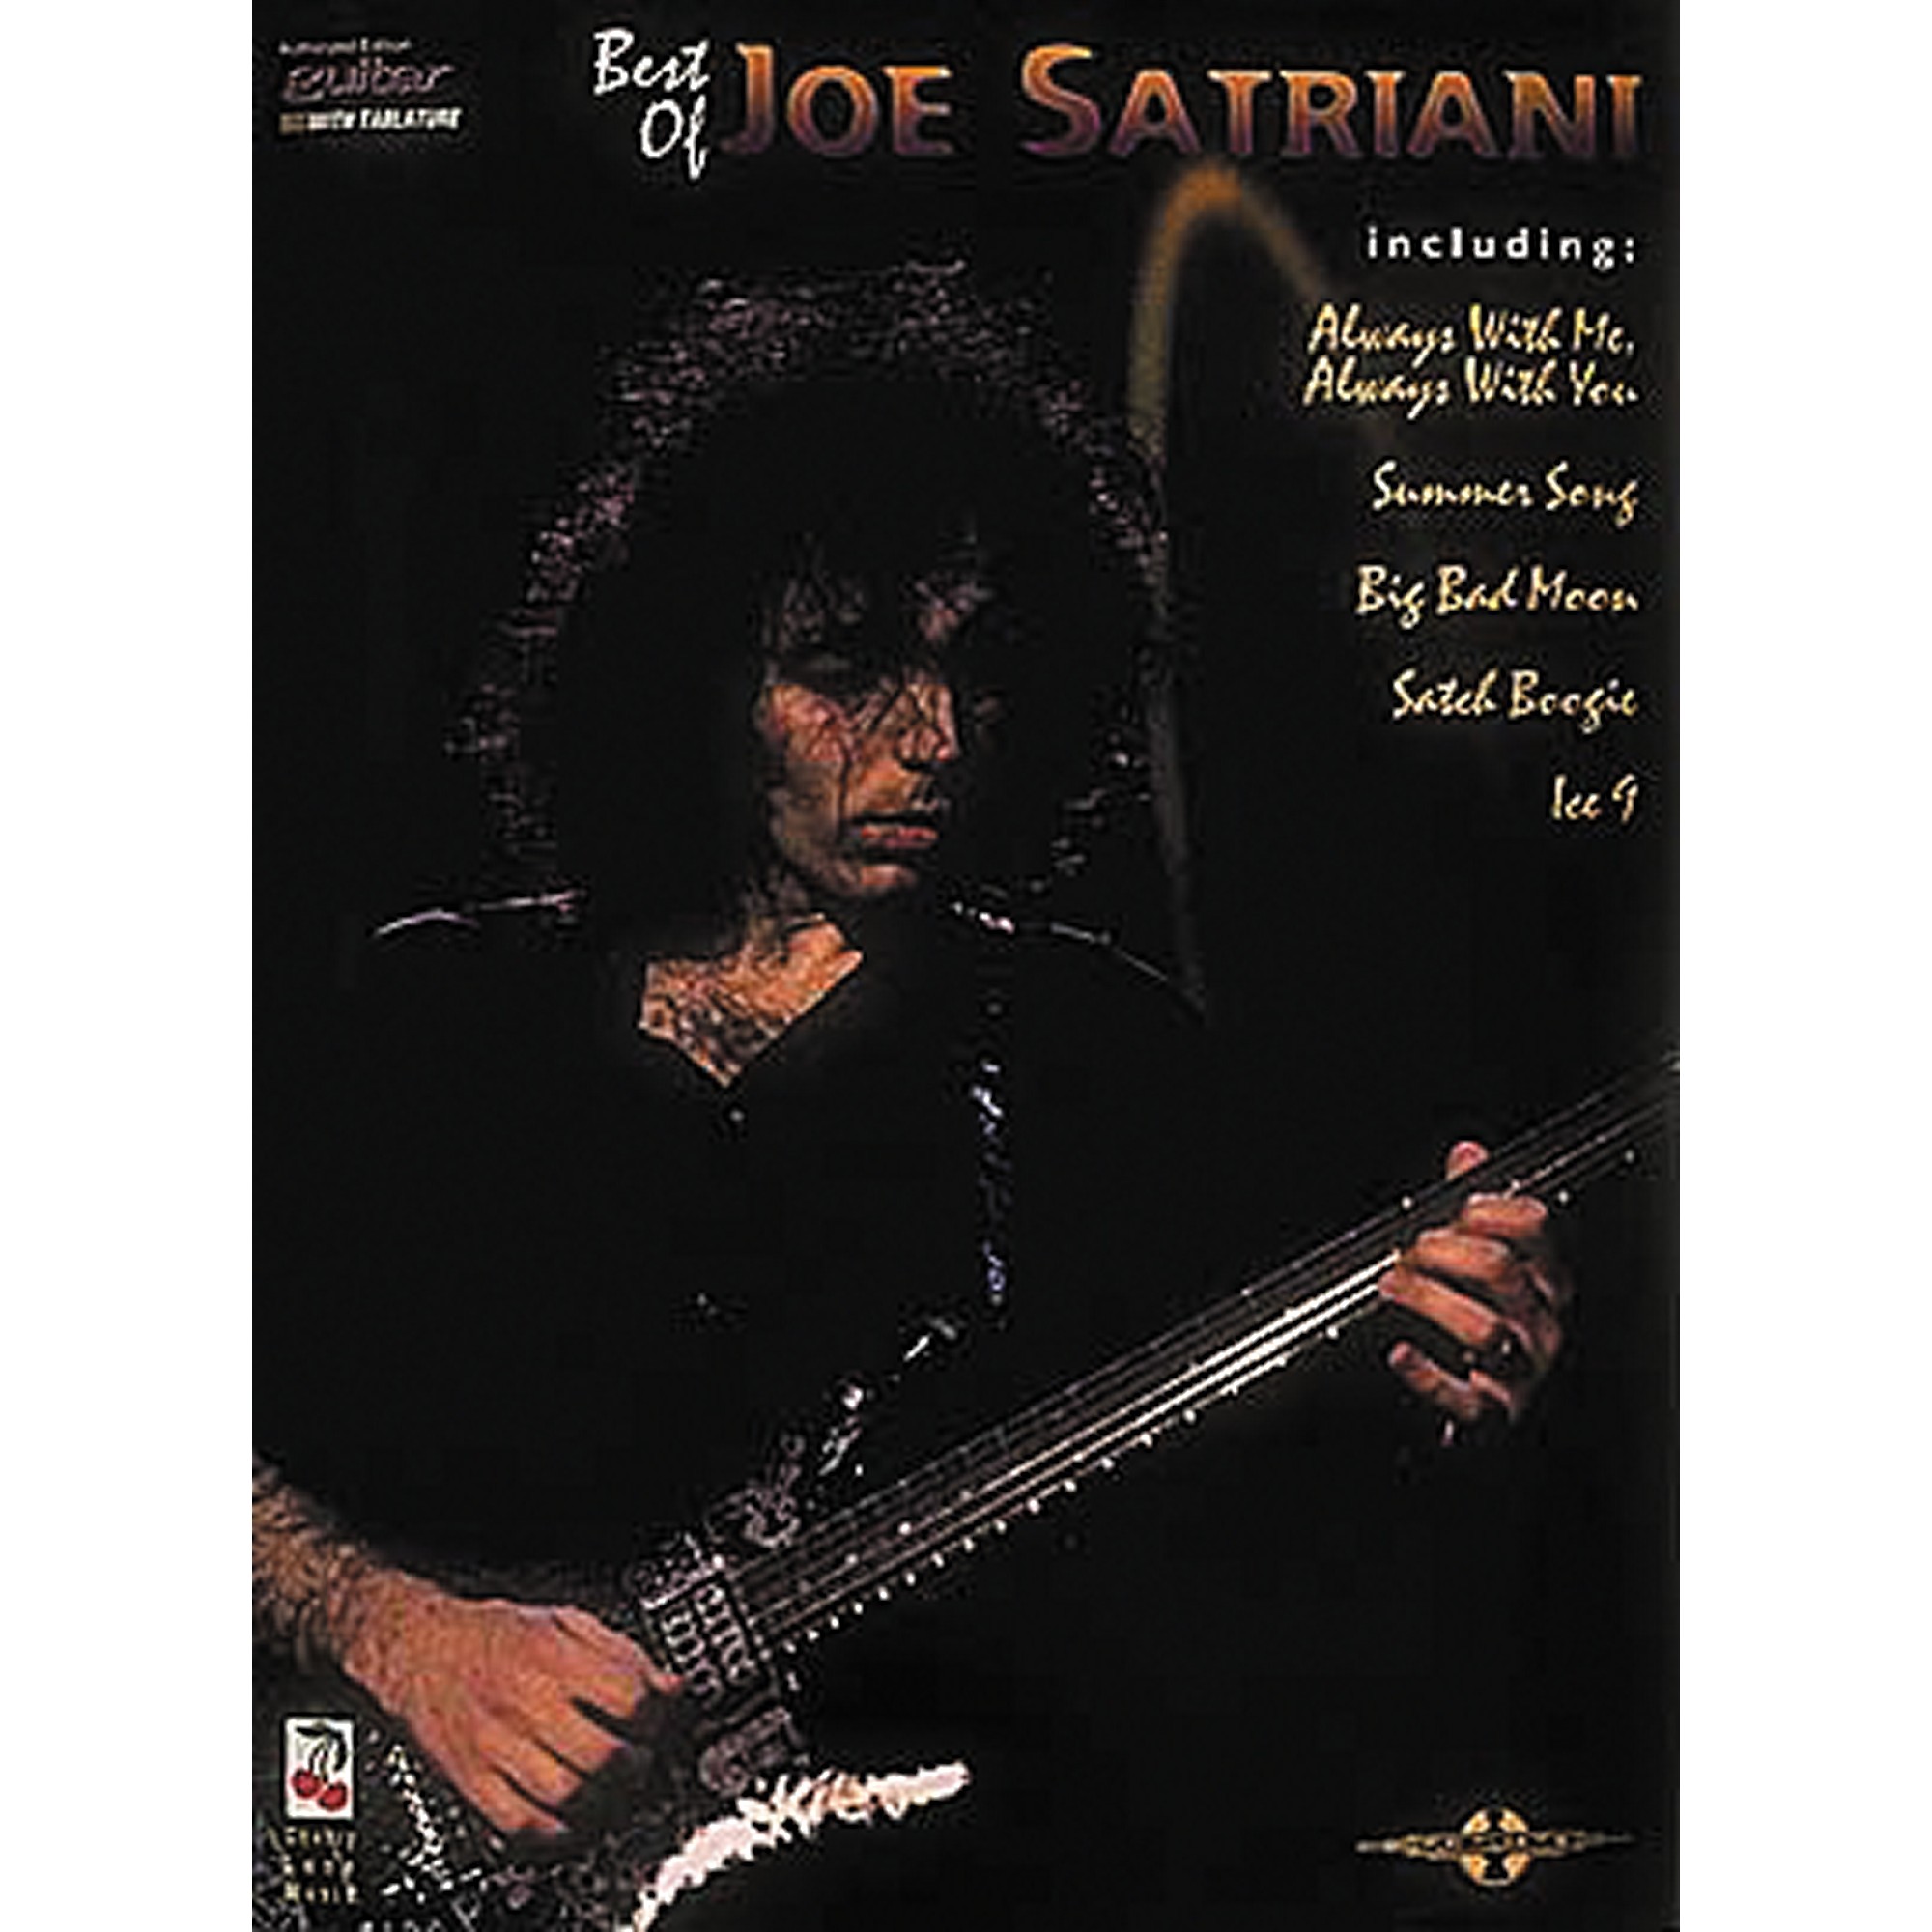 Always With Me, Always With You Tab by Joe Satriani (Guitar Pro